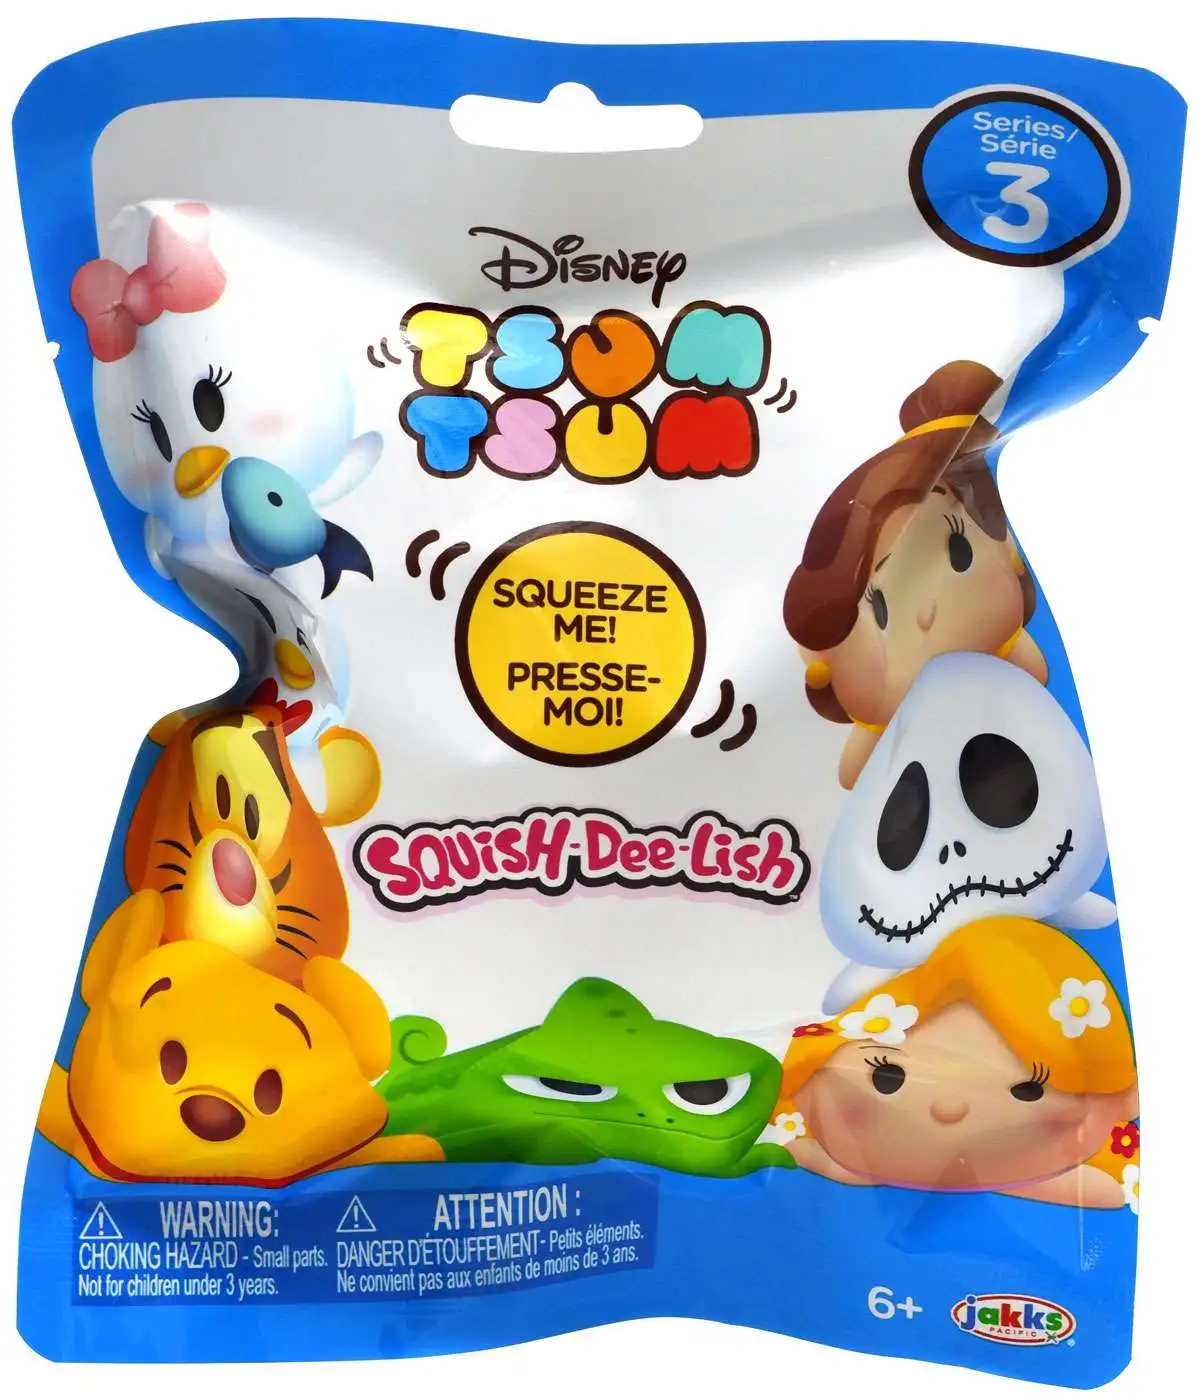 Disney Tsum Tsum Squish-Dee-Lish Series 3 Mystery Pack Jakks Pacific -  ToyWiz